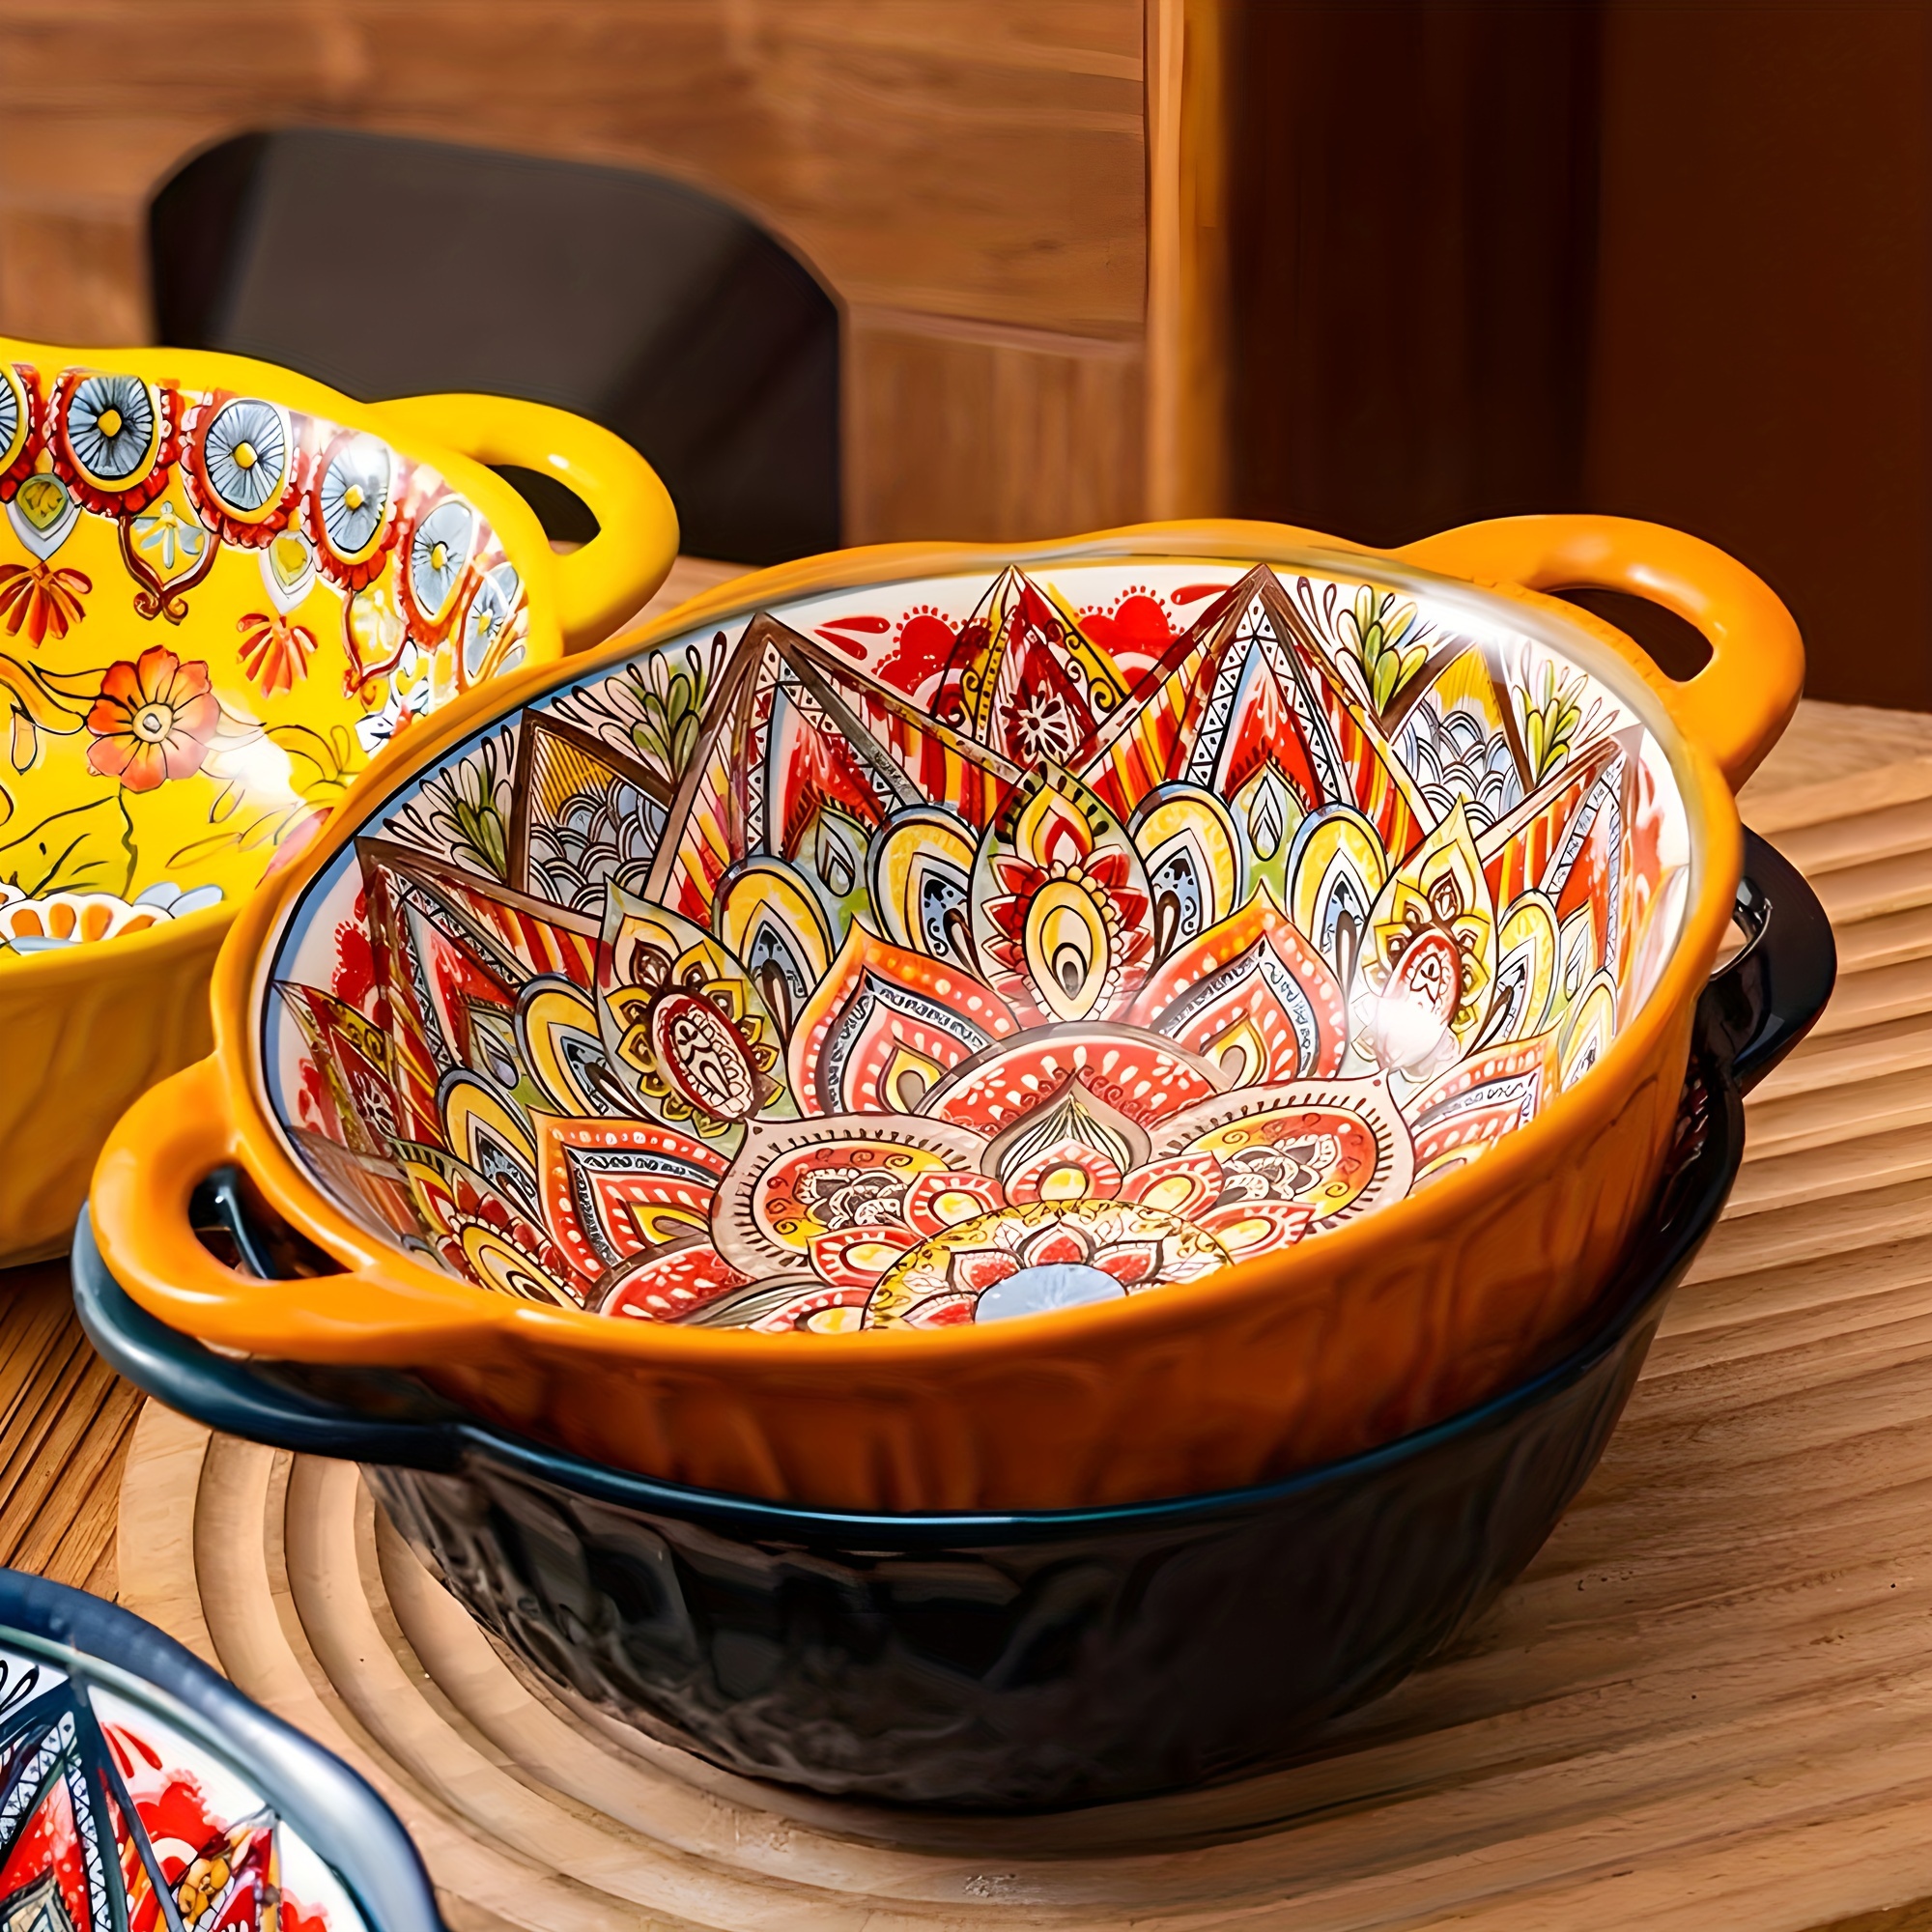 

1pc, Bohemian Dual-handled Ceramic Bowls, Decorative Tableware, Dishwasher Safe, Microwave Safe, Vibrant Mandala Design, For Serving And Home Decor